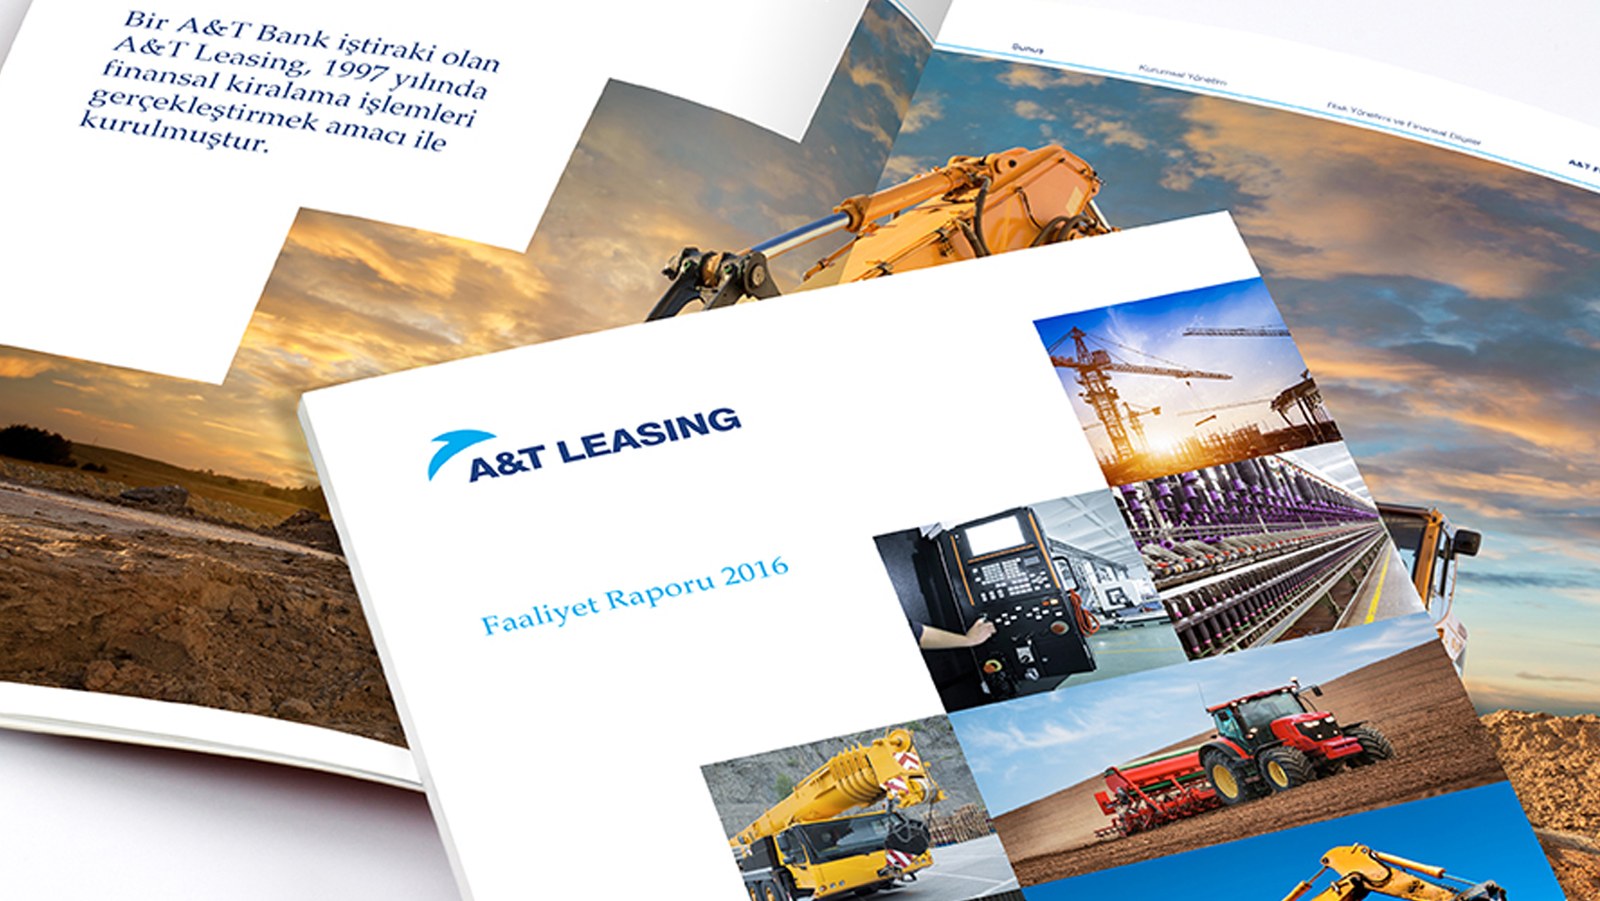 A&T LEASING / 2016 Faaliyet Raporu / 2016 Annual Report